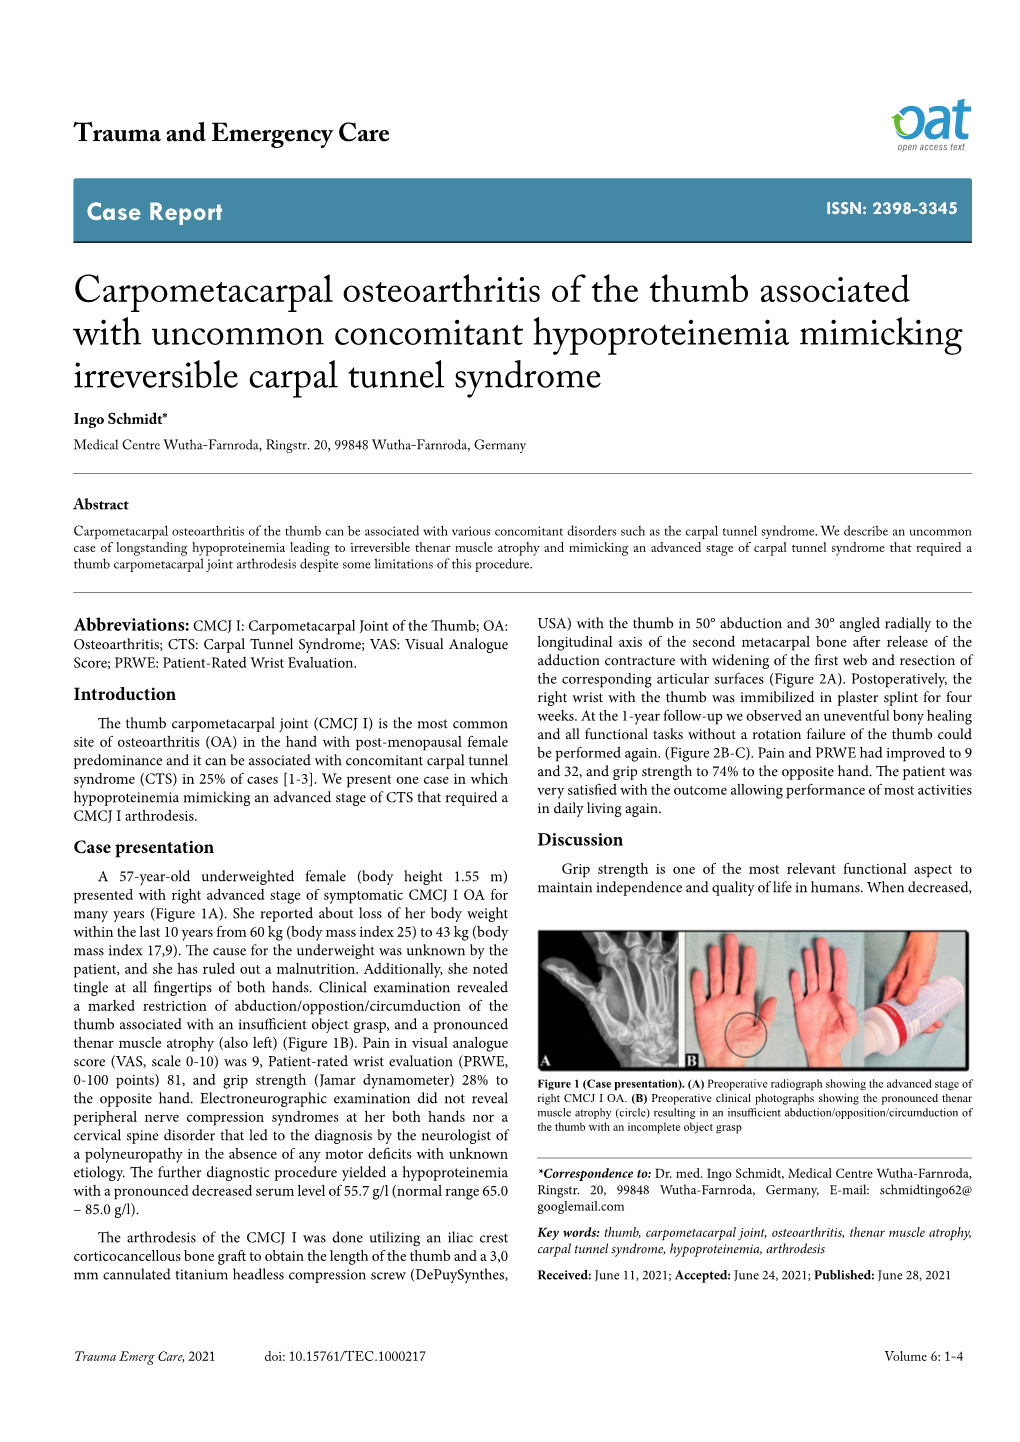 Carpometacarpal Osteoarthritis of the Thumb Associated with Uncommon